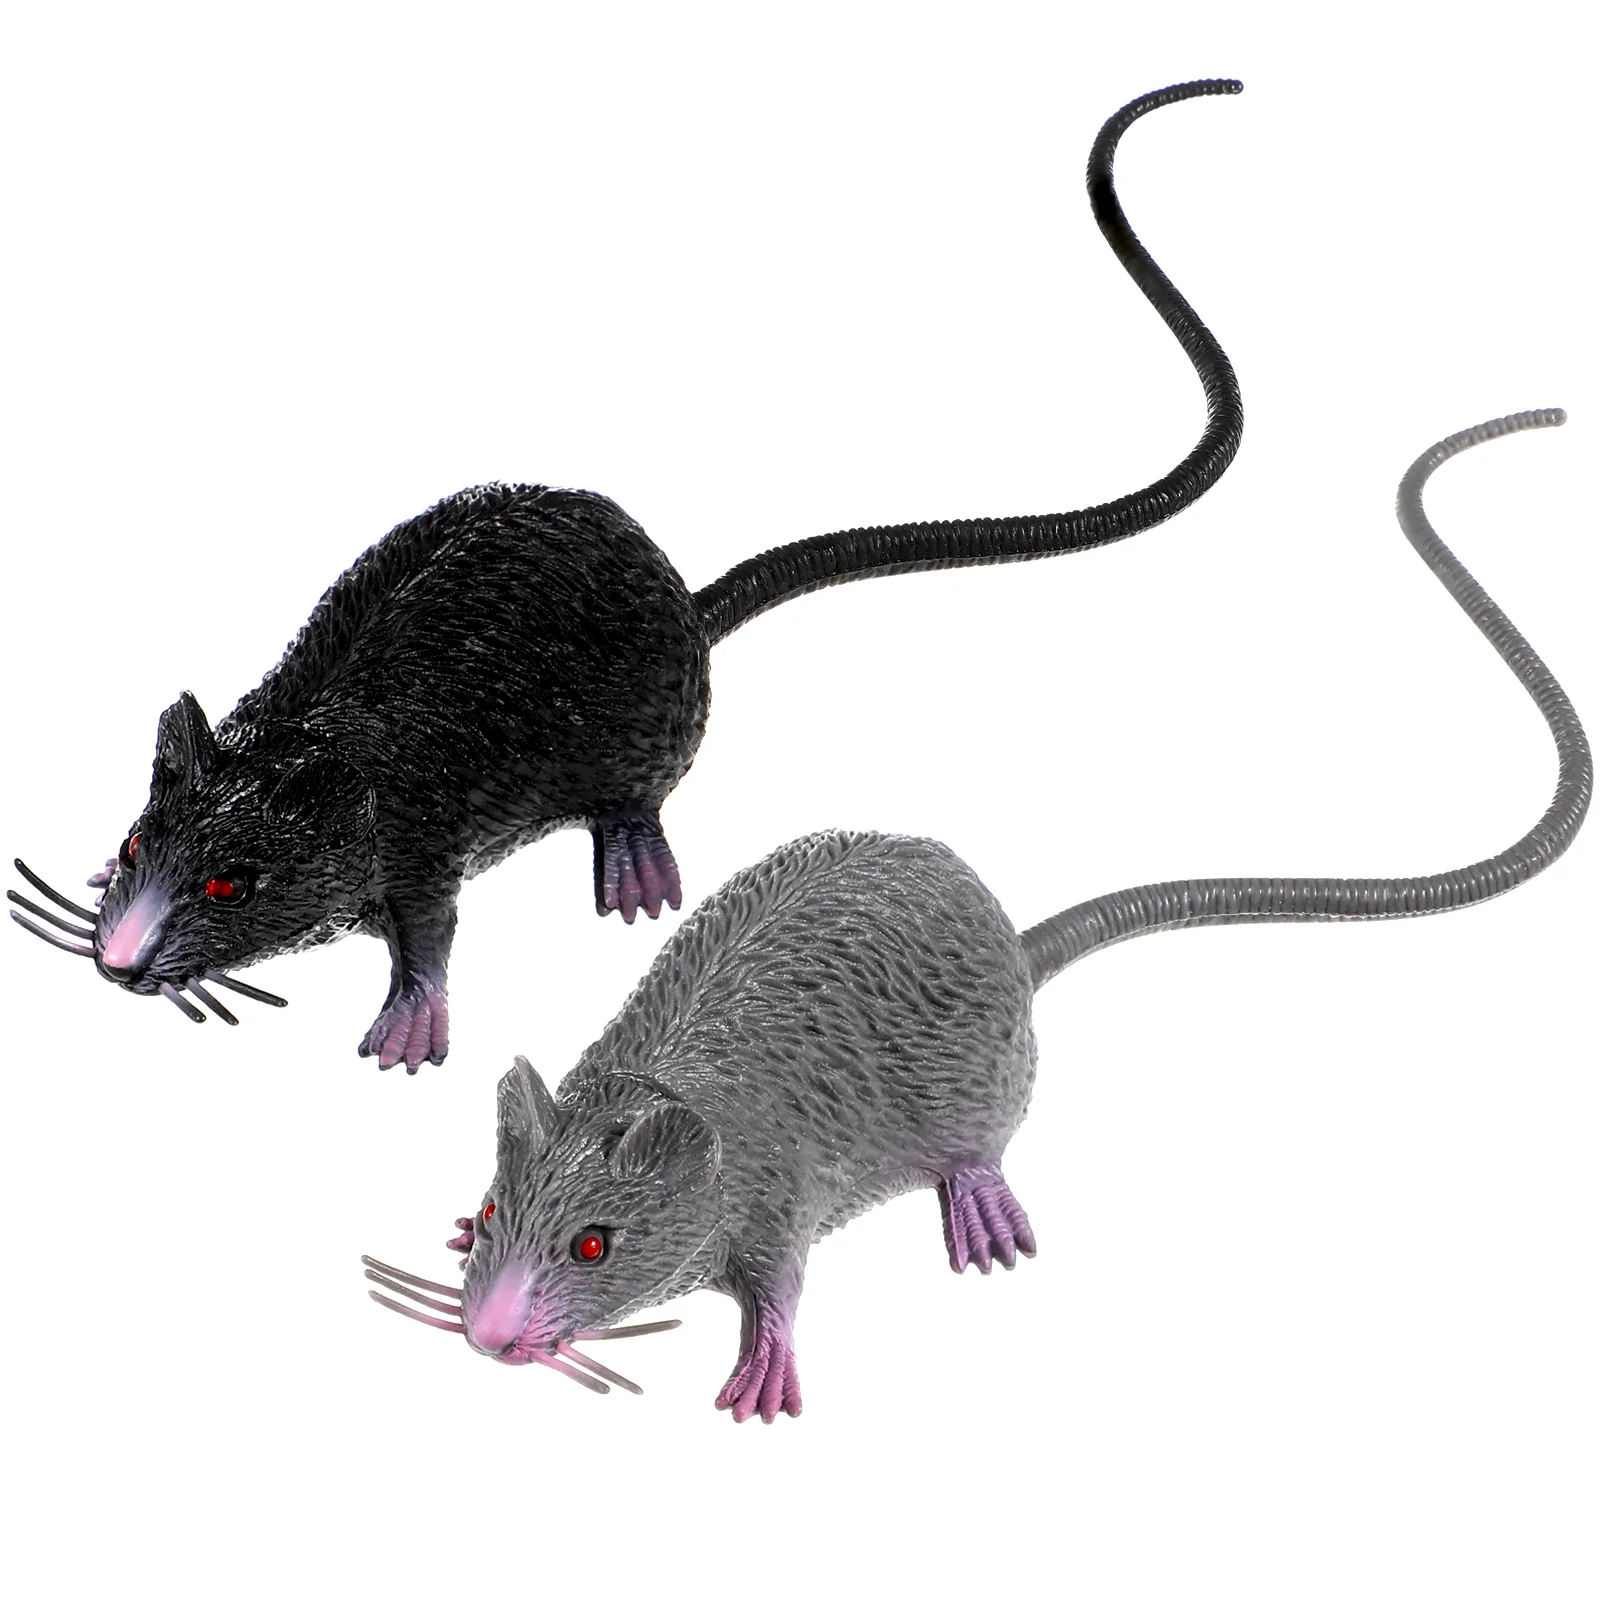 

2 Pcs Realistic Mice Toys Lifelike Mice Creepy Toys Spooky Fake Rat Figures Tricks Pranks Props Horror Rata halloween